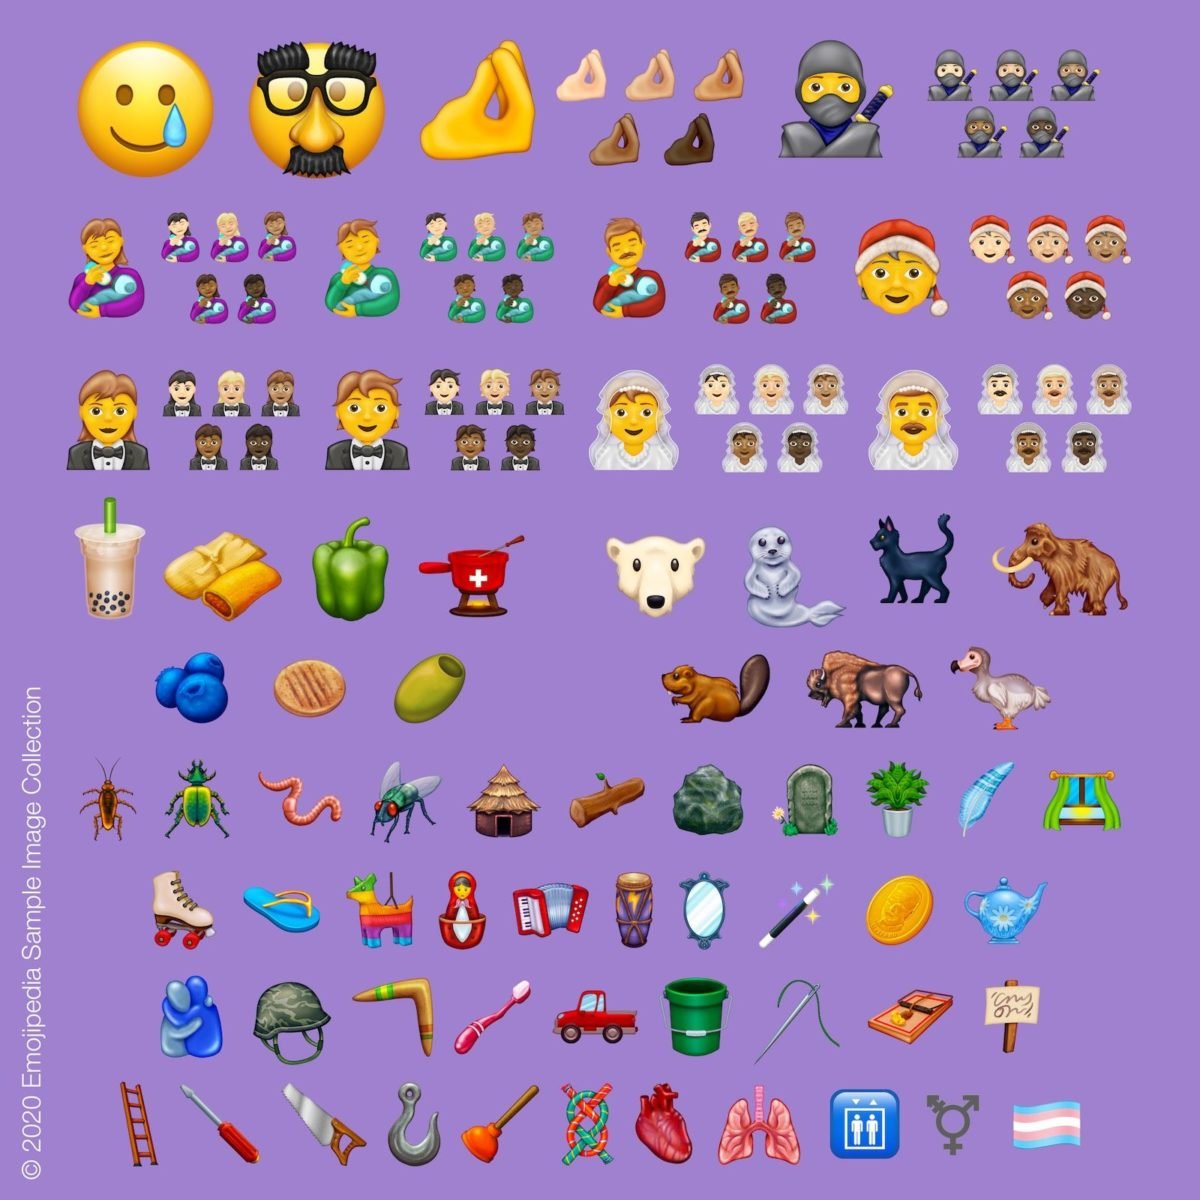 2020 new emojis